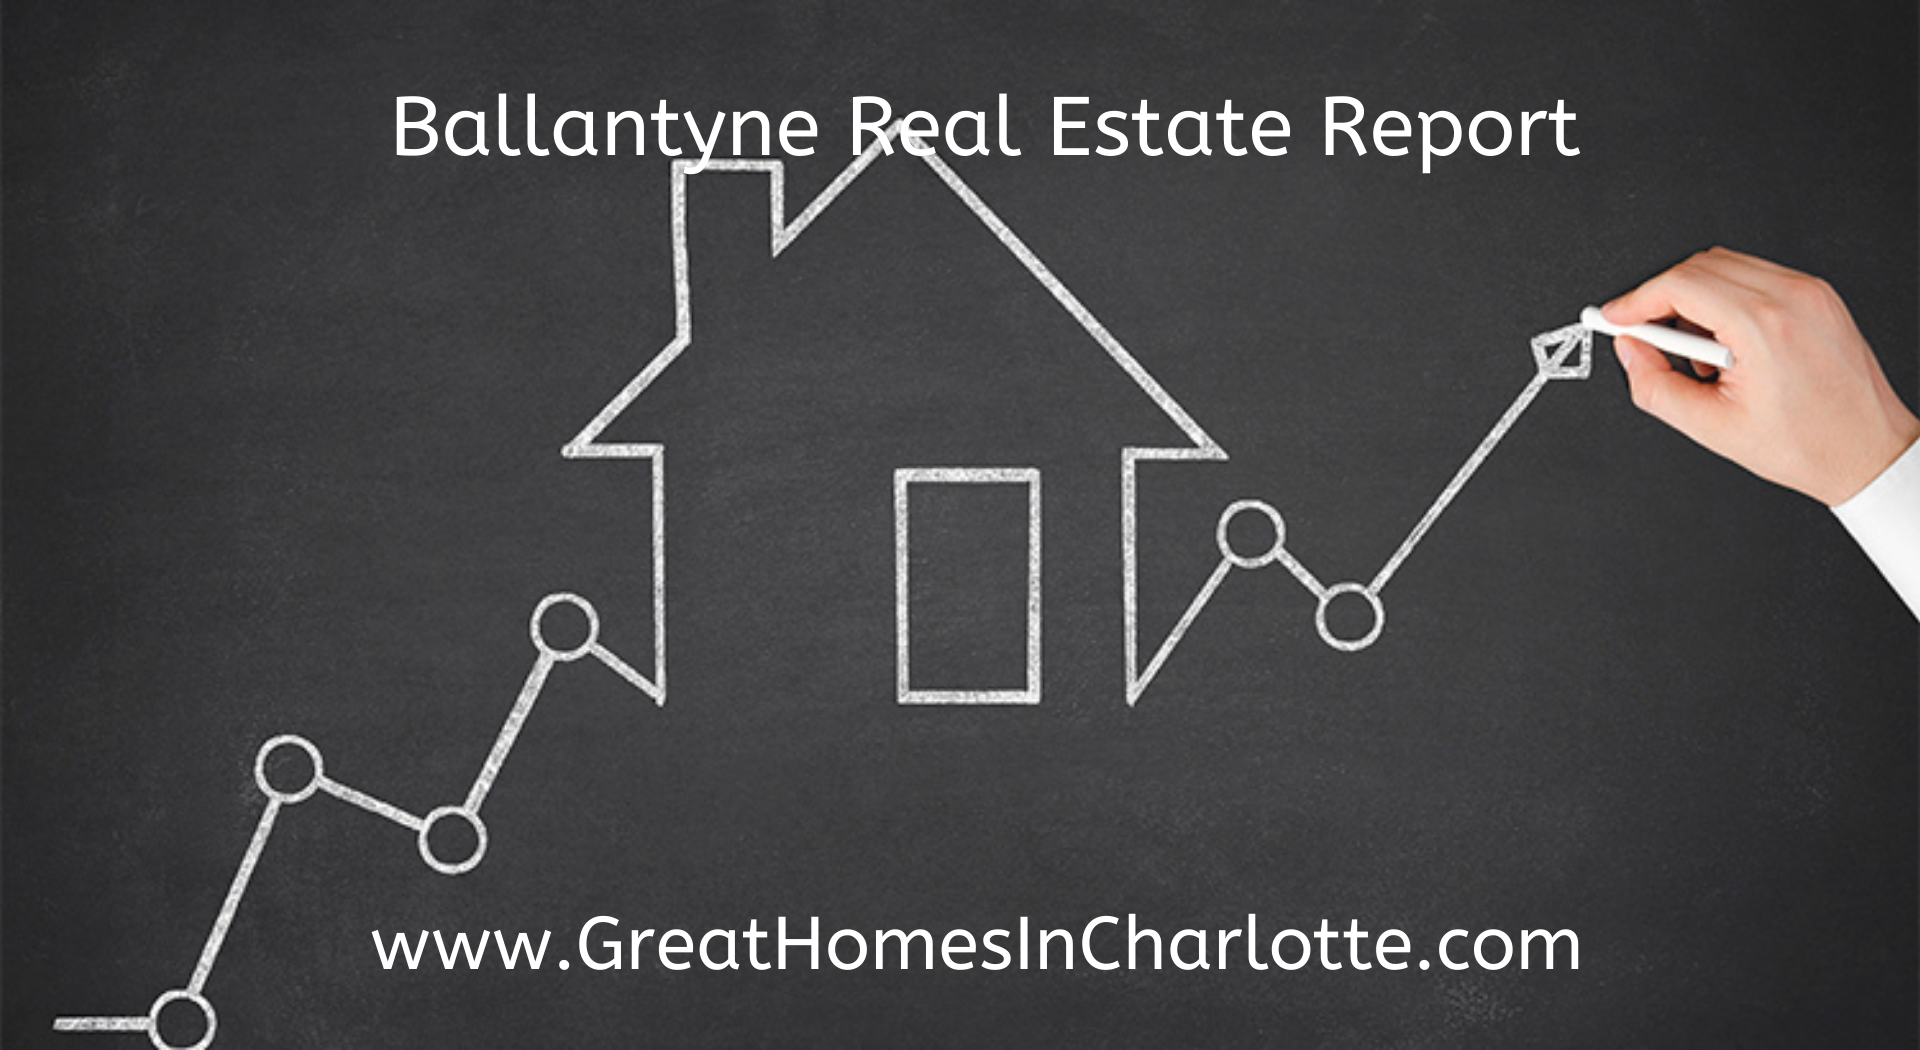 Ballantyne_Real_Estate_Report.png